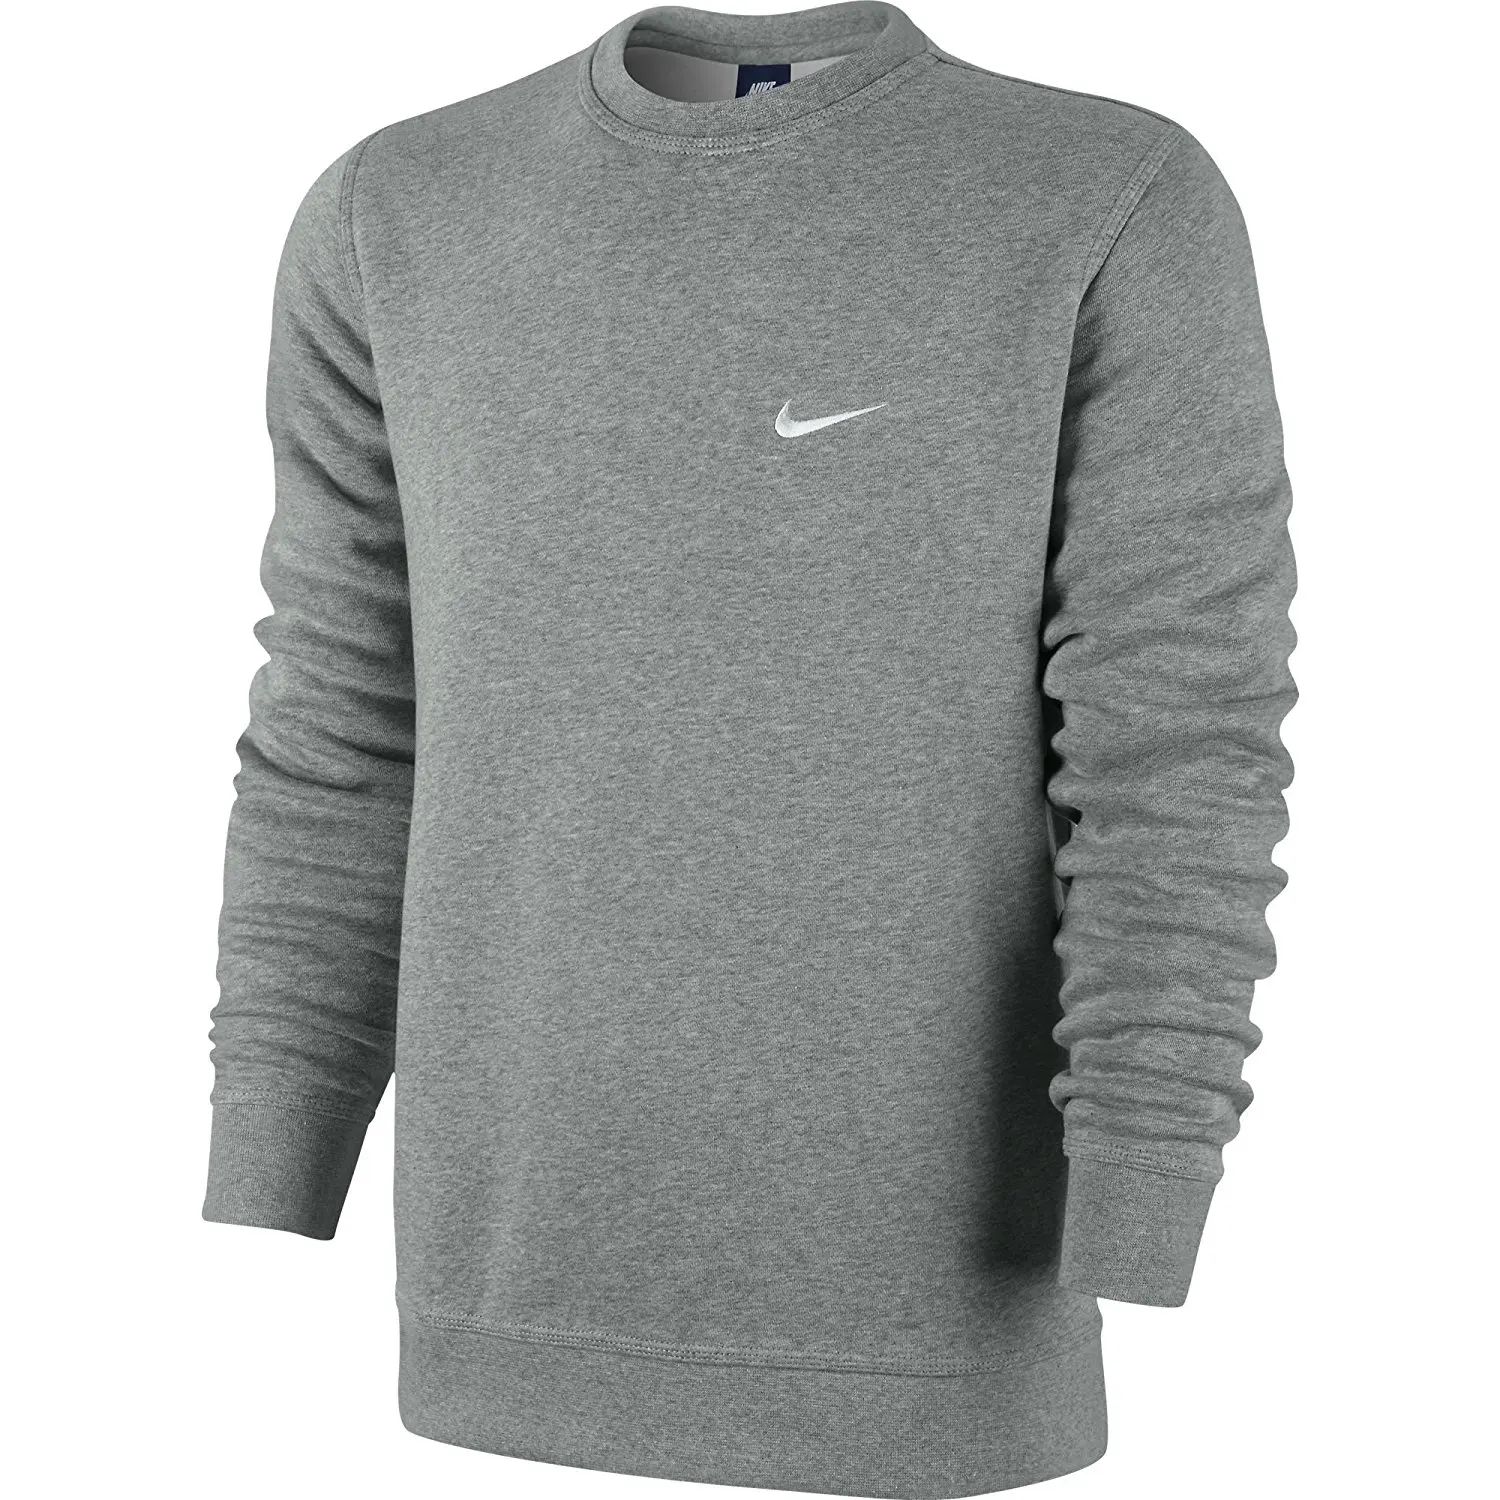 Cheap Nike Sweatshirt, find Nike Sweatshirt deals on line at Alibaba.com